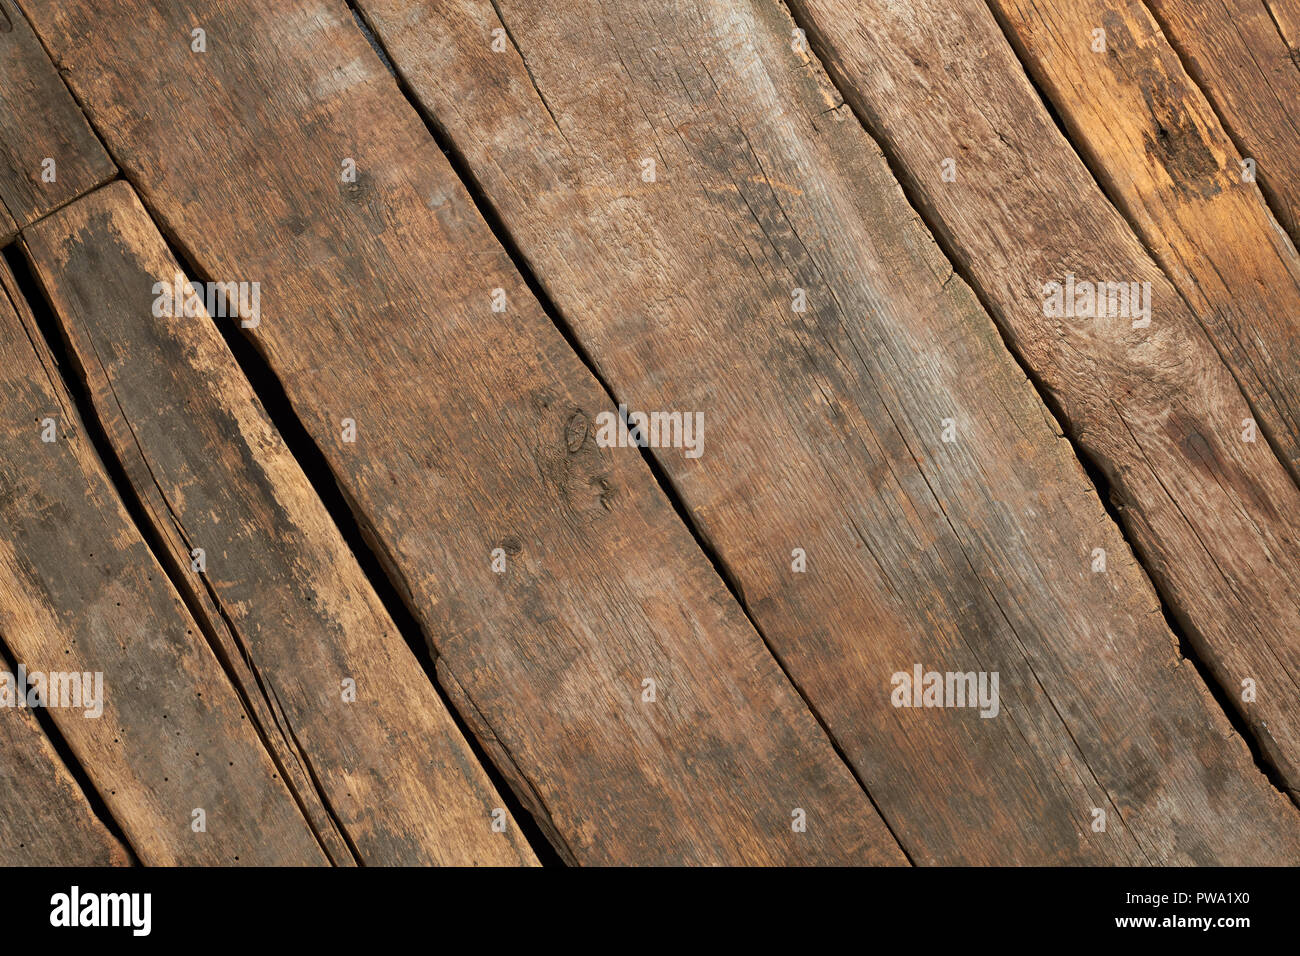 Abstrakte Holz- Textur. Alten, braunen Holzplanken. Grobe rustikalen hölzernen Brettern. Stockfoto